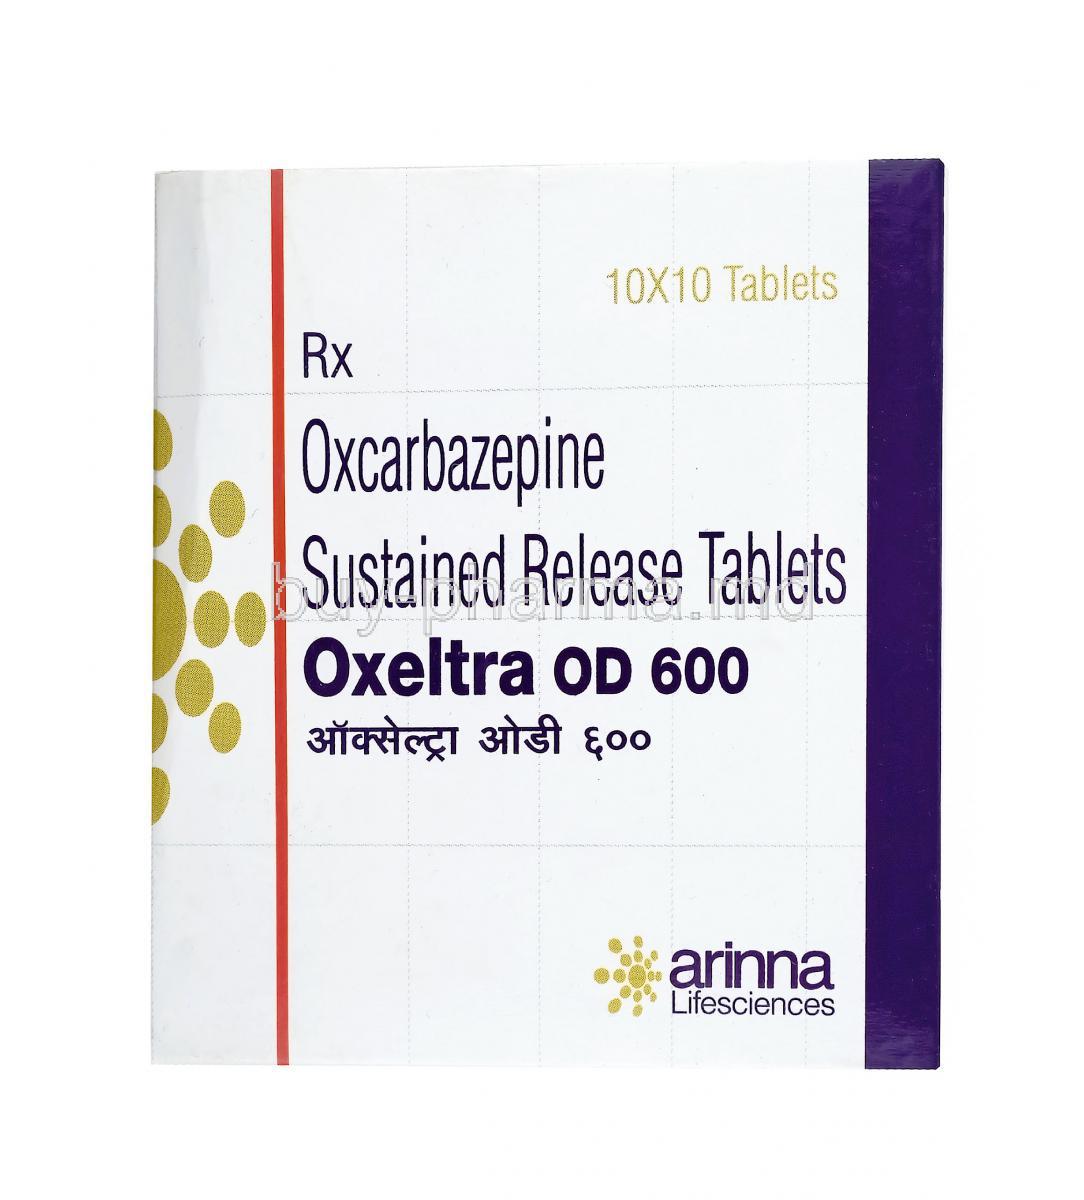 Oxeltra OD, Oxcarbazepine 600mg (SR)